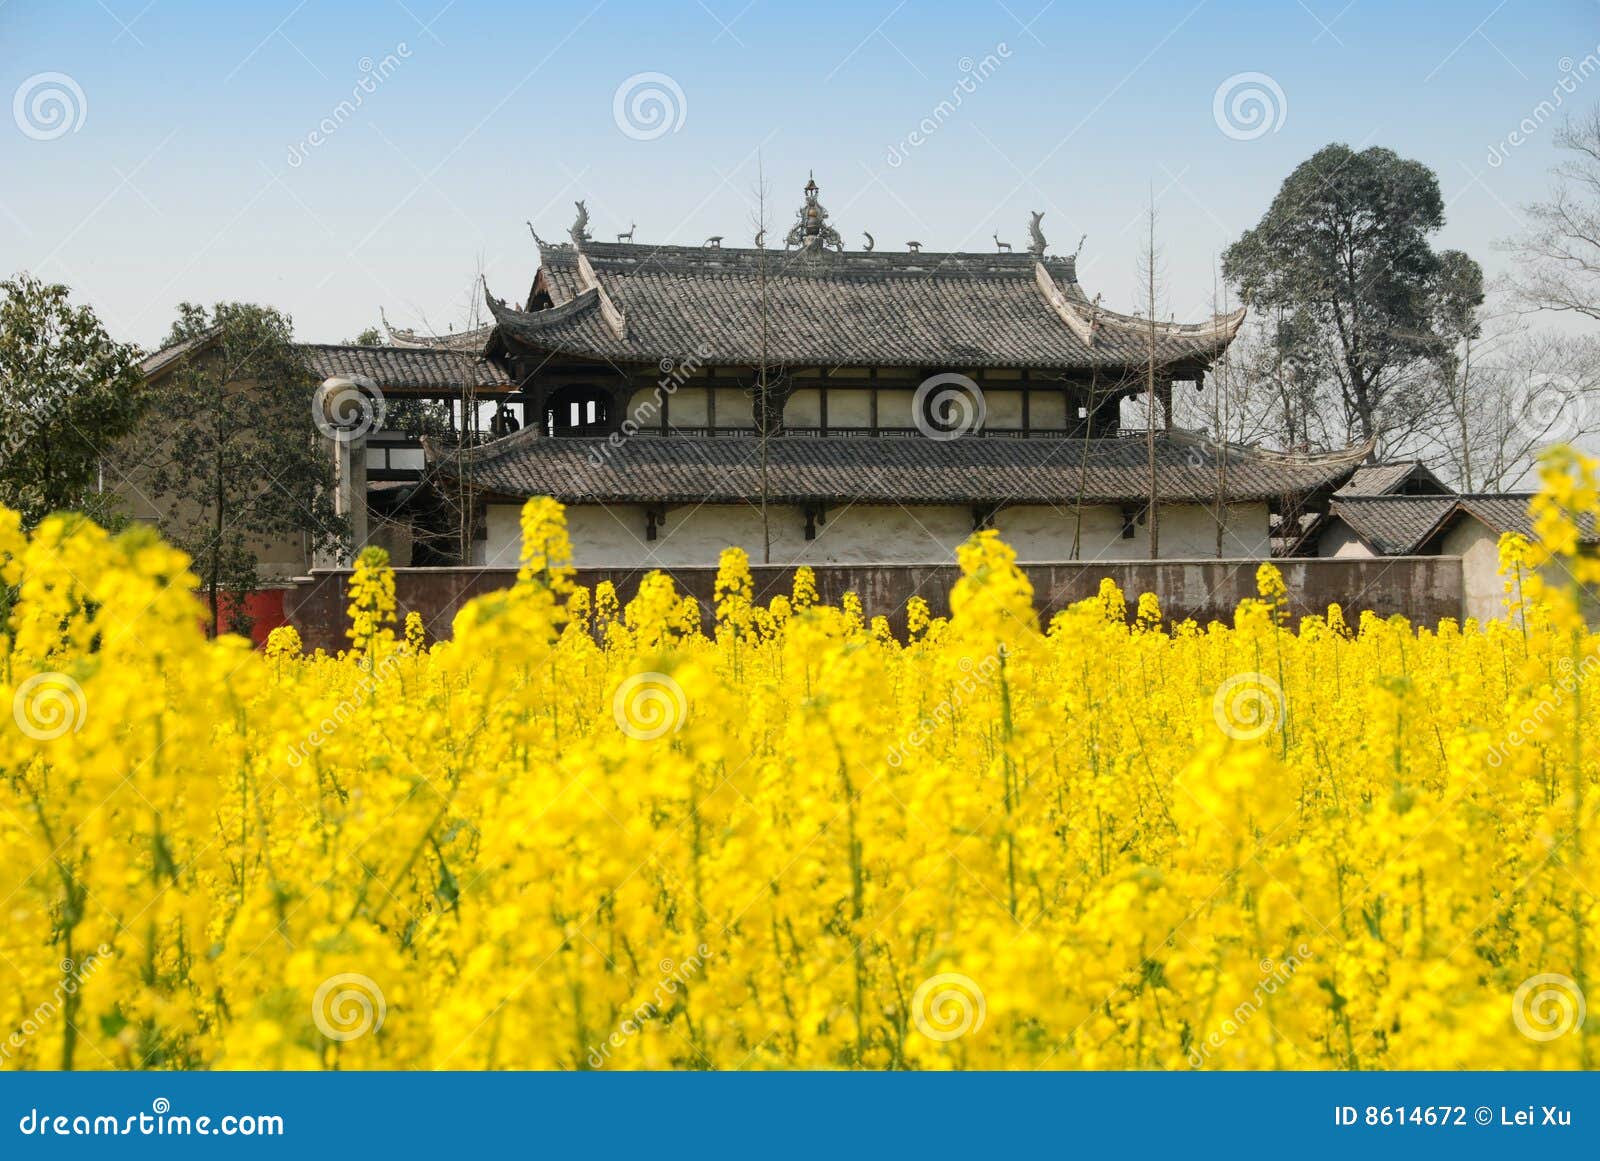 pengzhou, china: jing tu buddhist temple